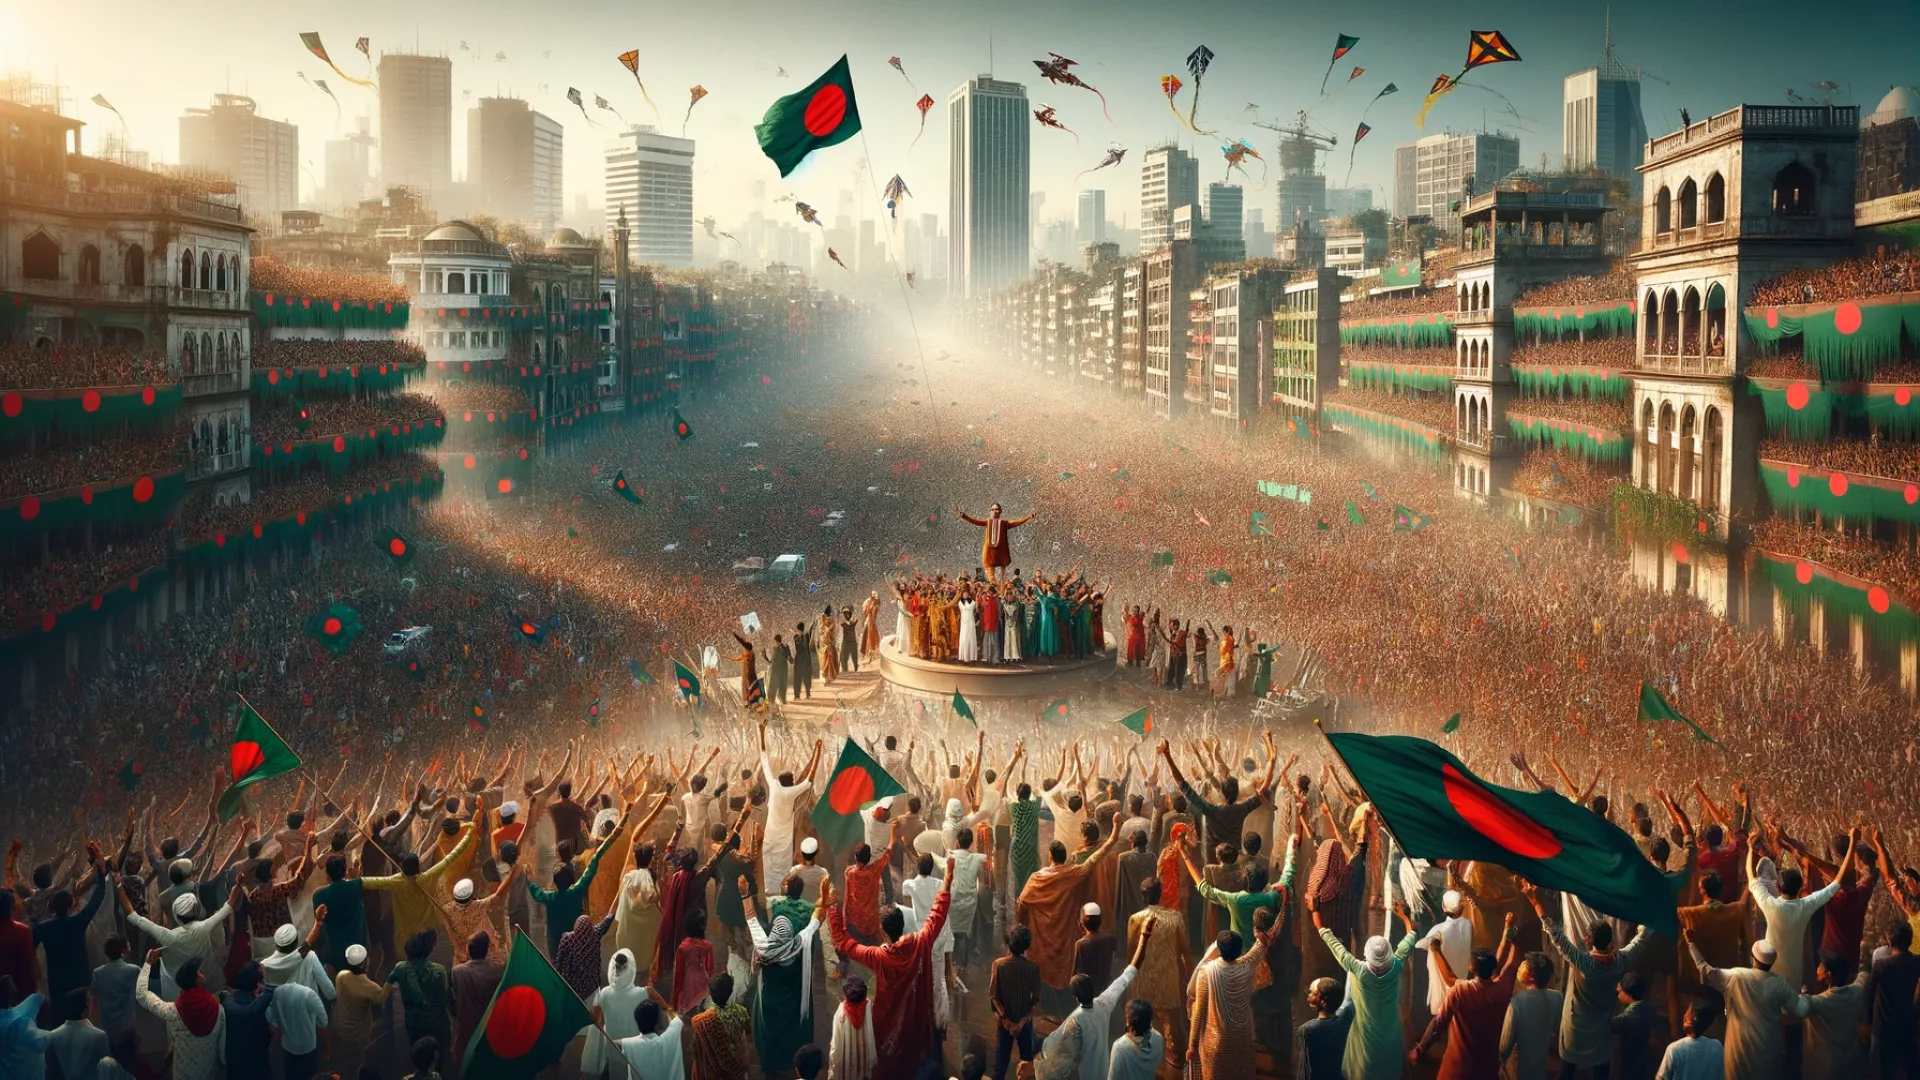 Bangladesh's Independence Day